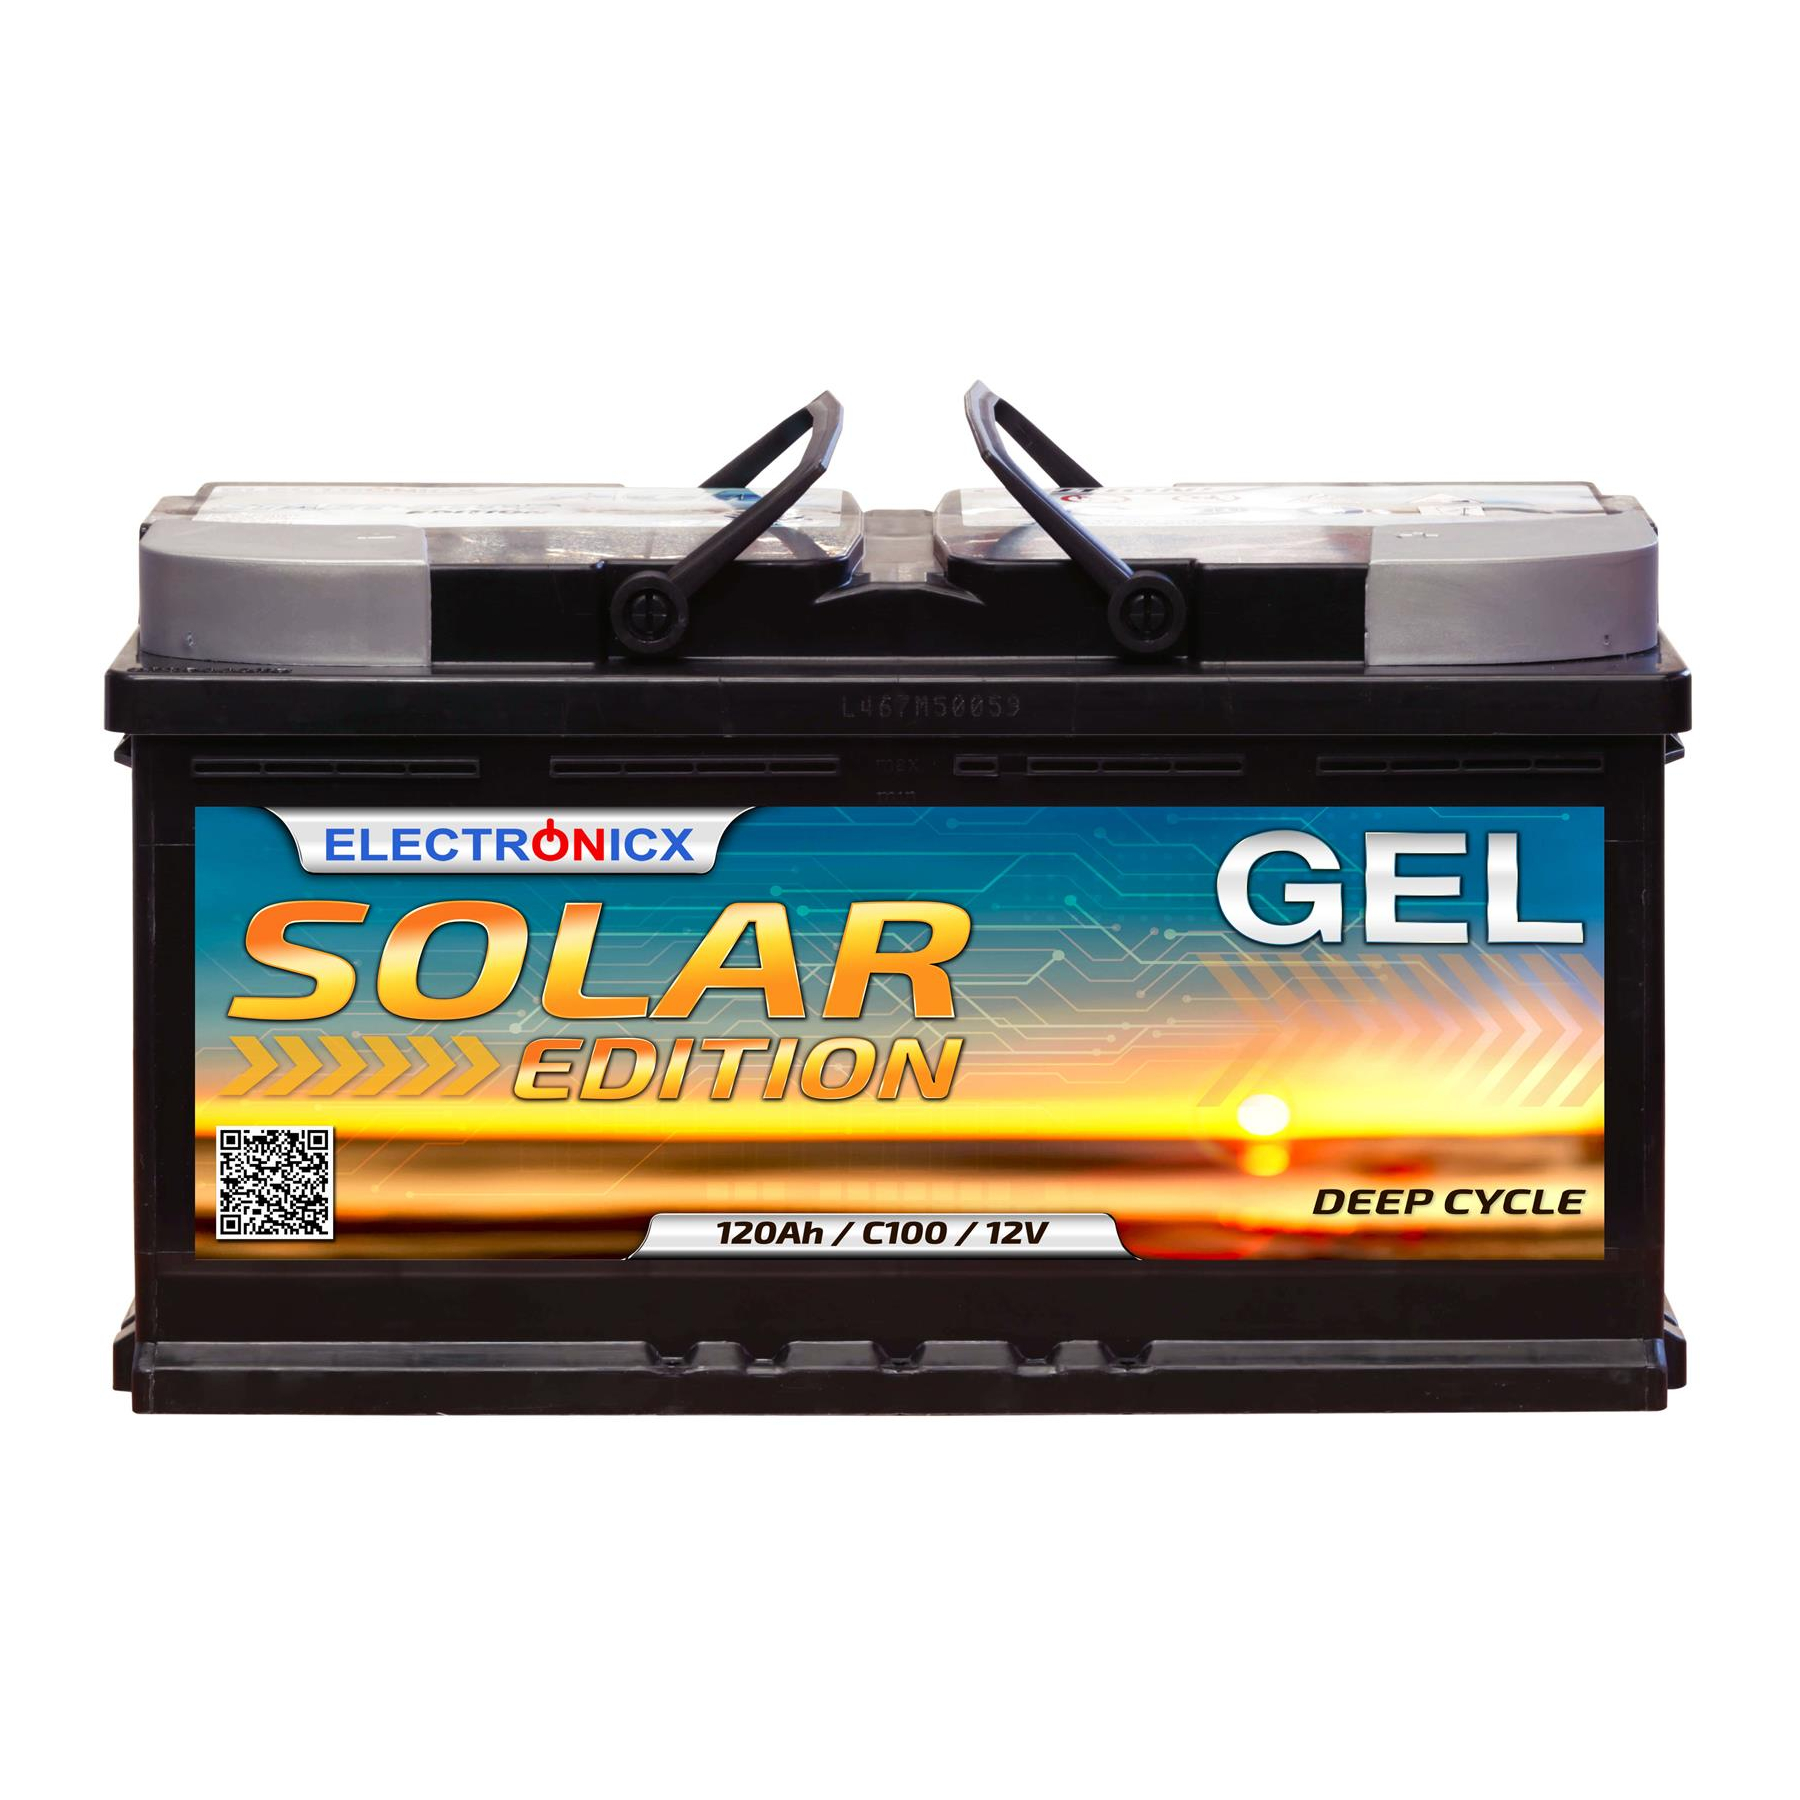 € 12V 169,99 Batterie AH Gel 120 Solar, Solar Edition Electronicx